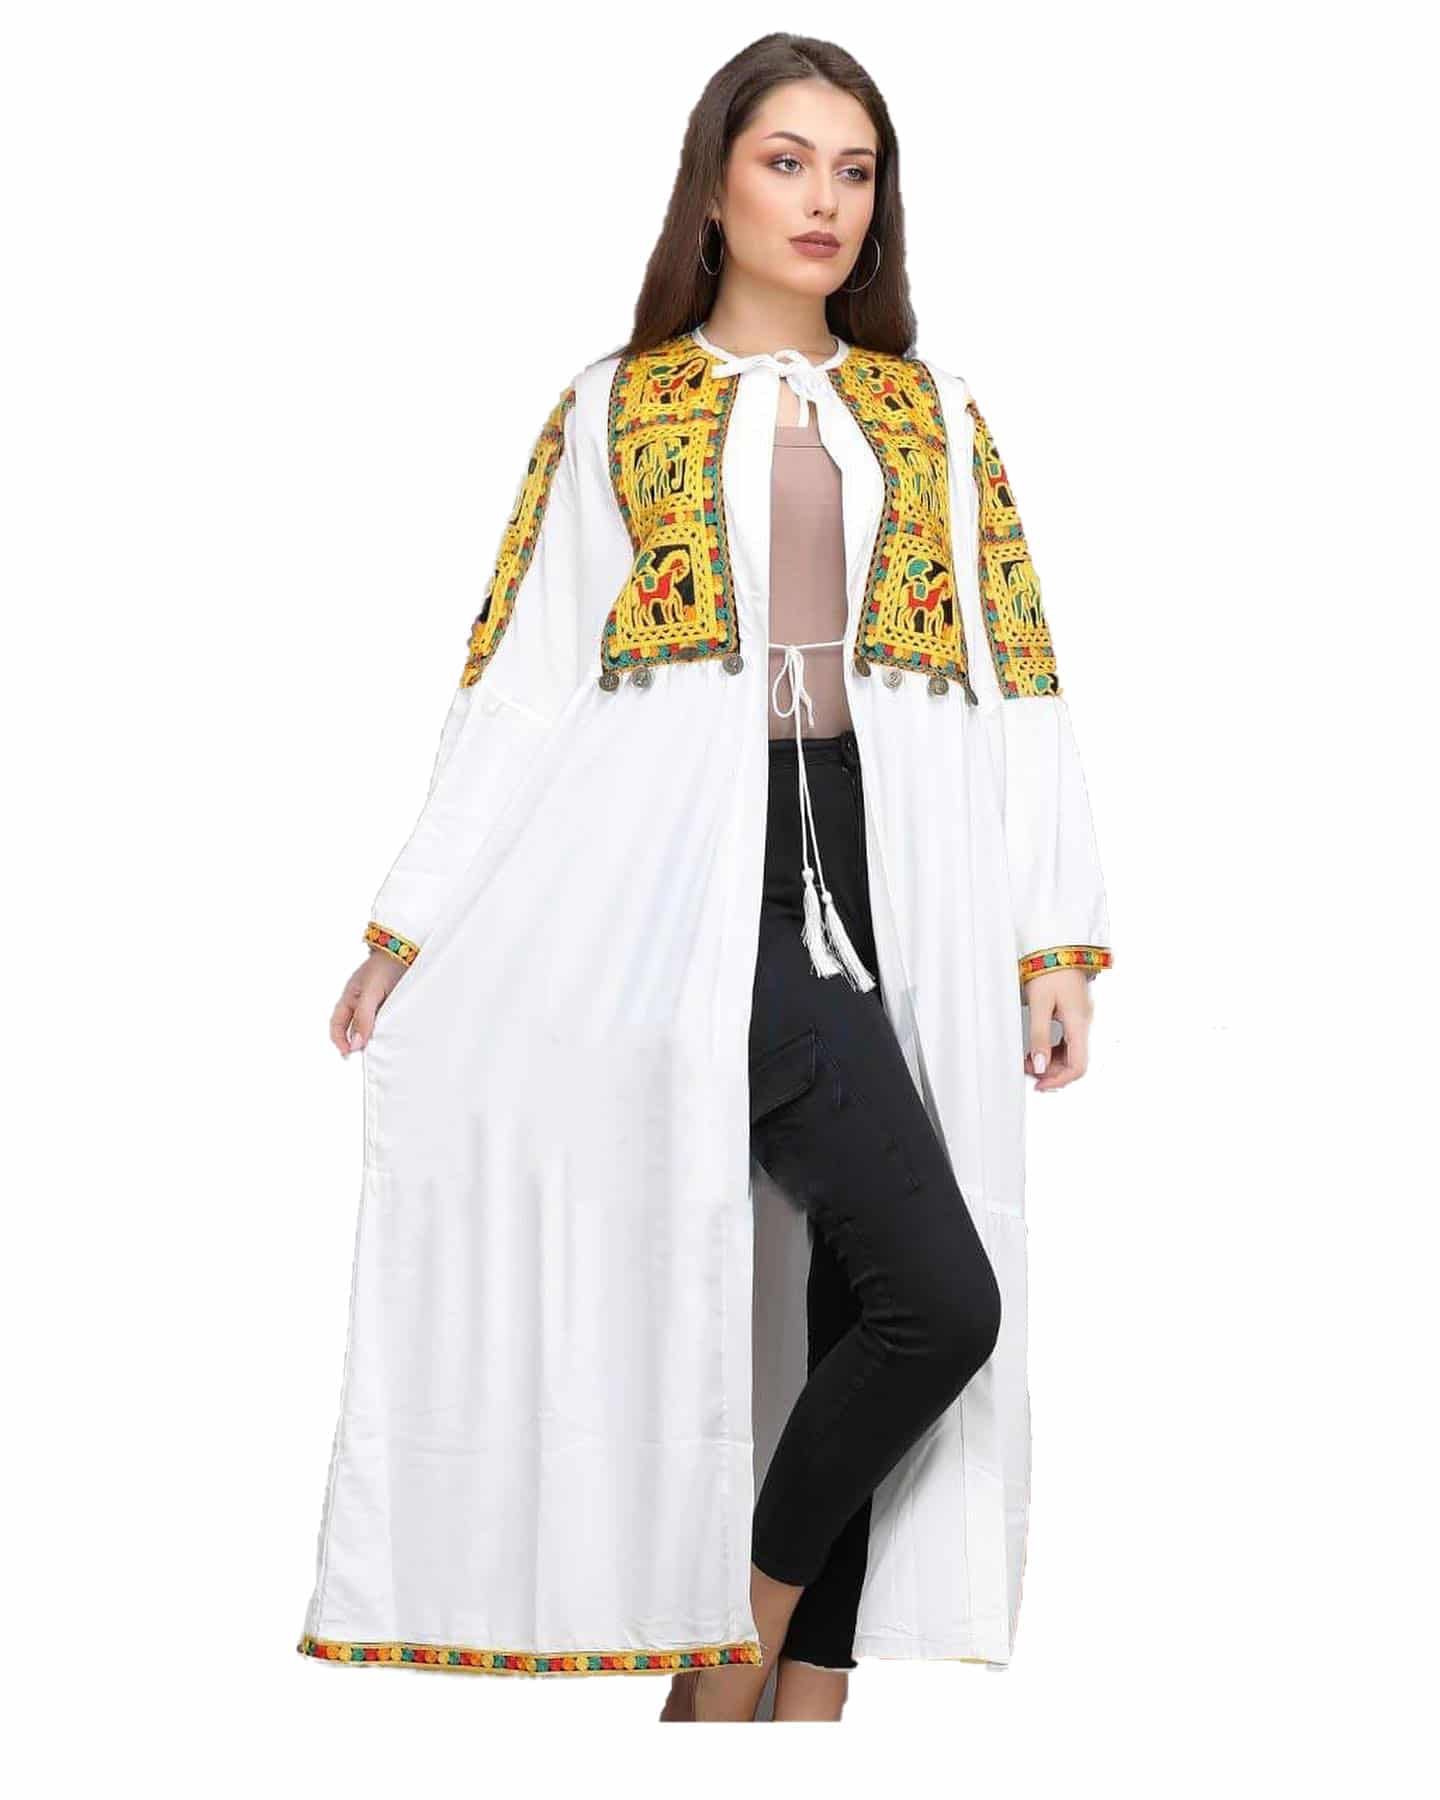 basht Abaya Open casual for women fashion white